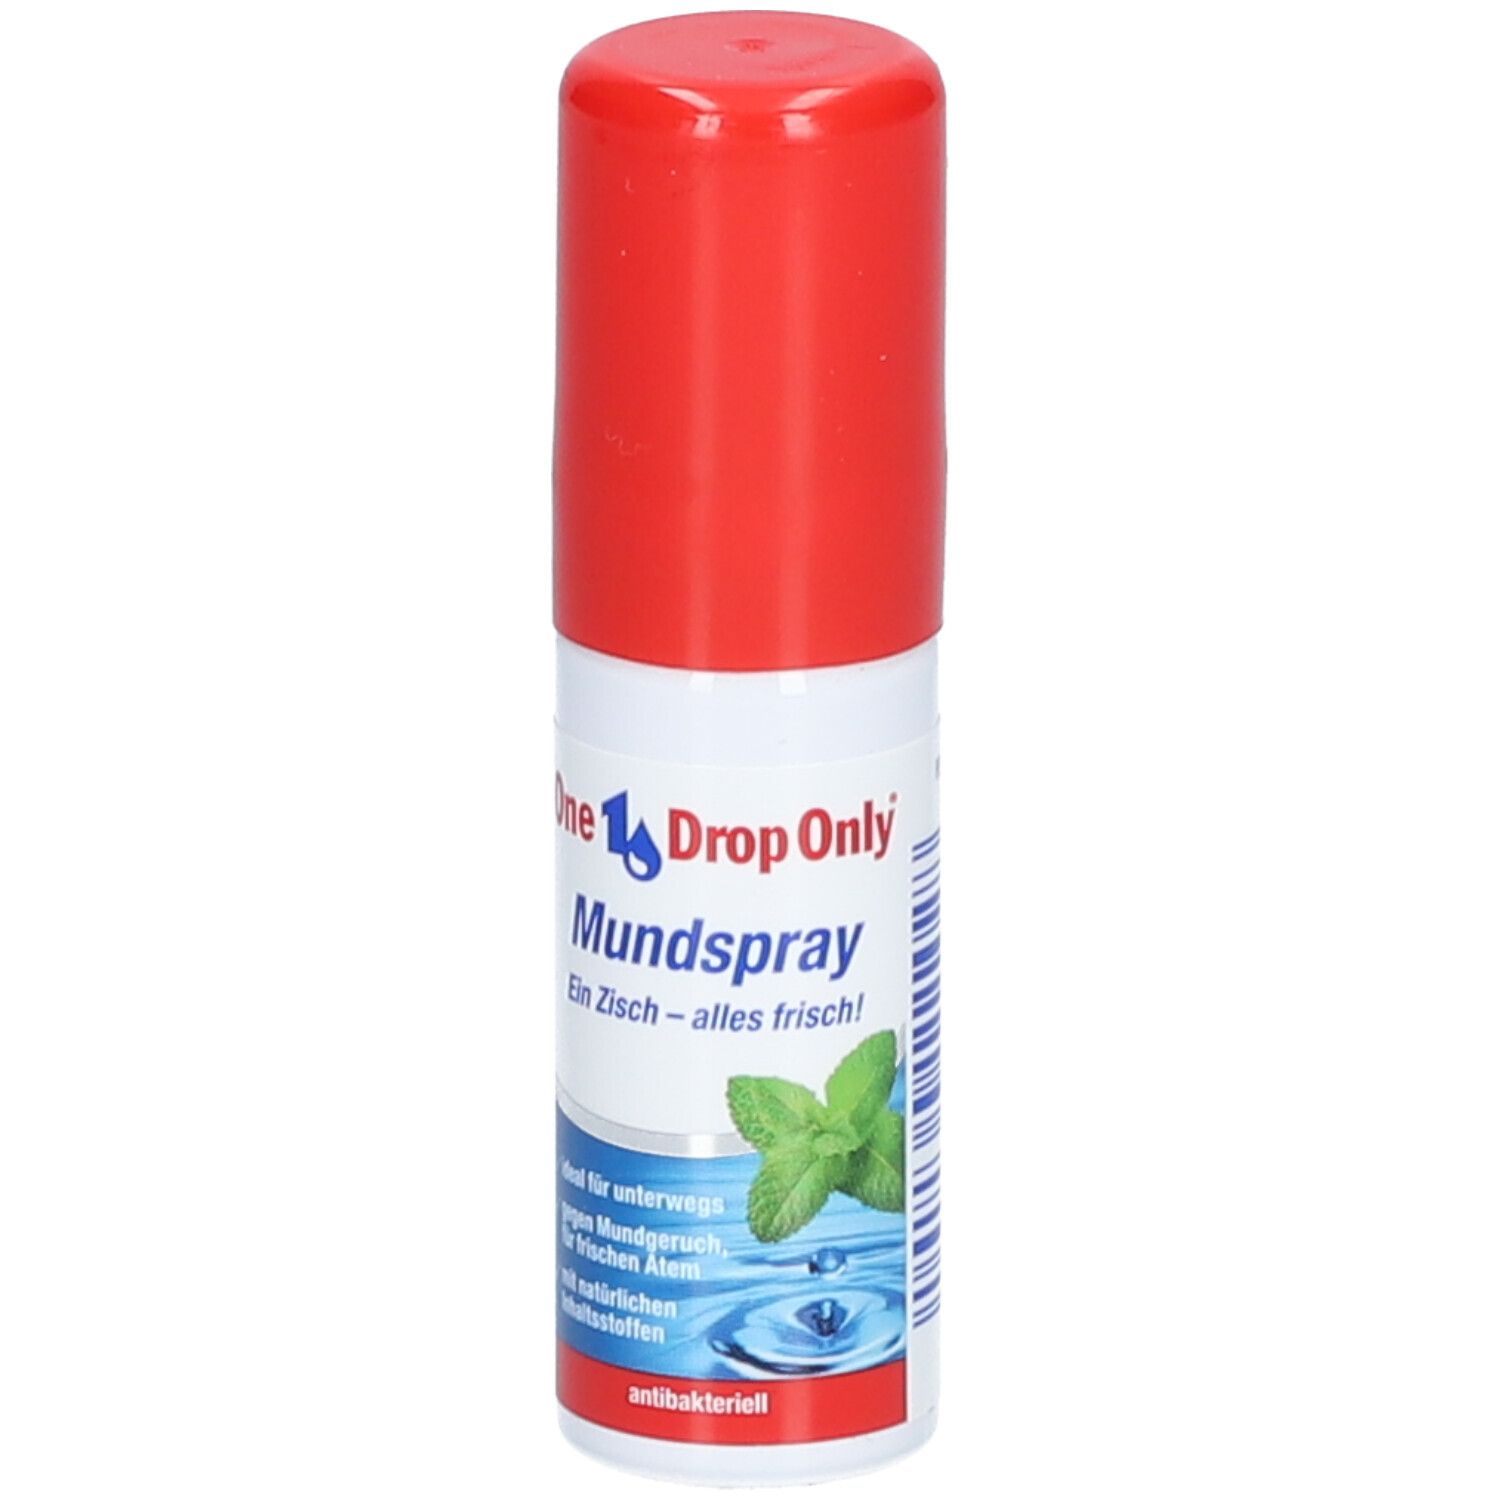 One Drop Only® Mundspray